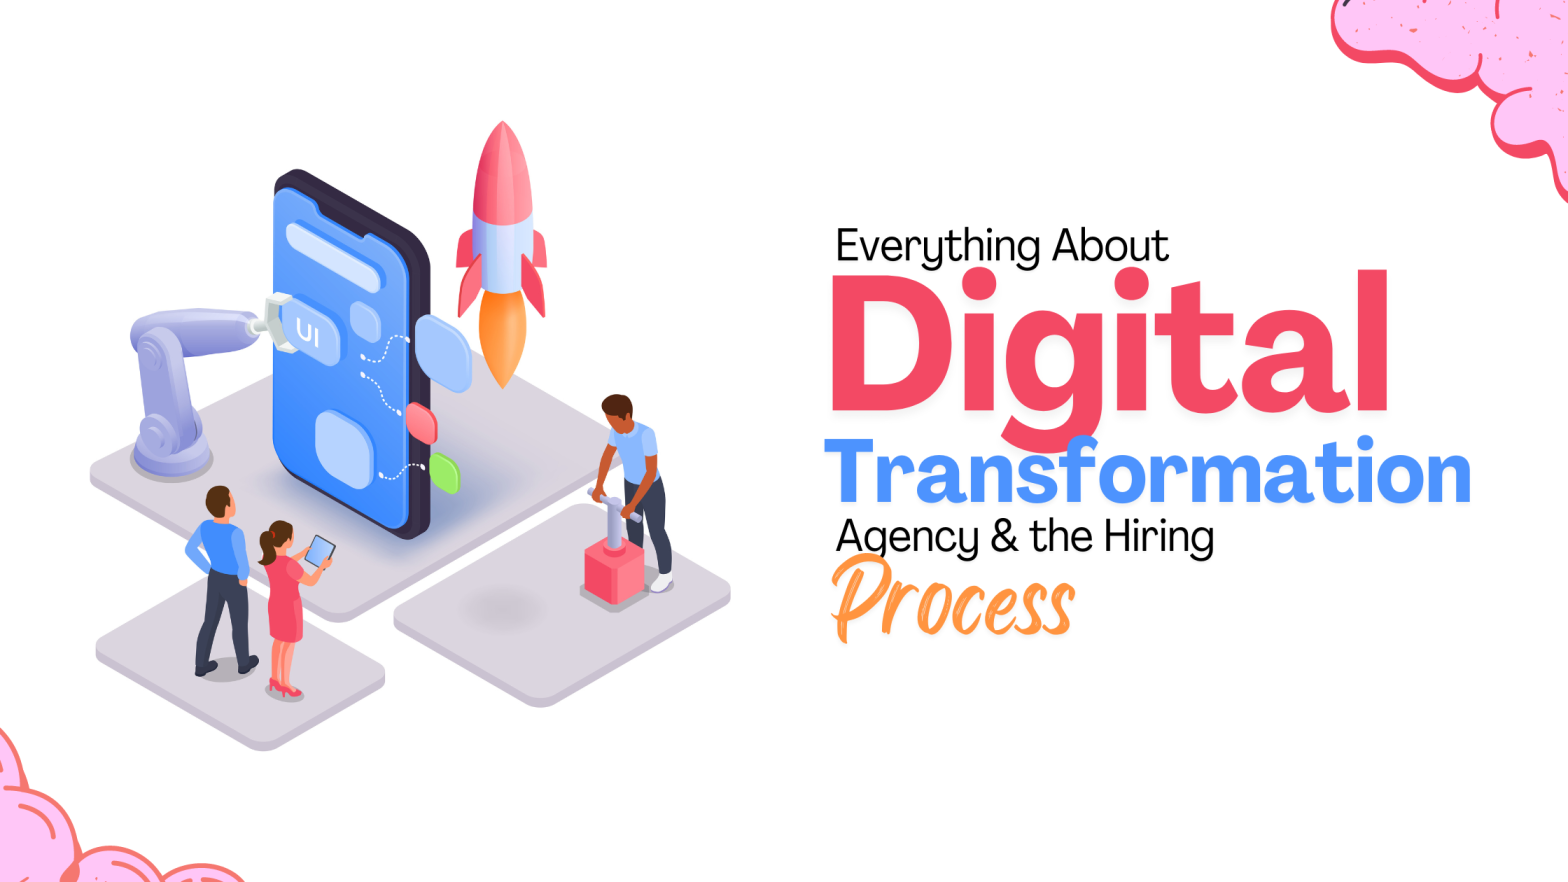 Digital Transformation Agency